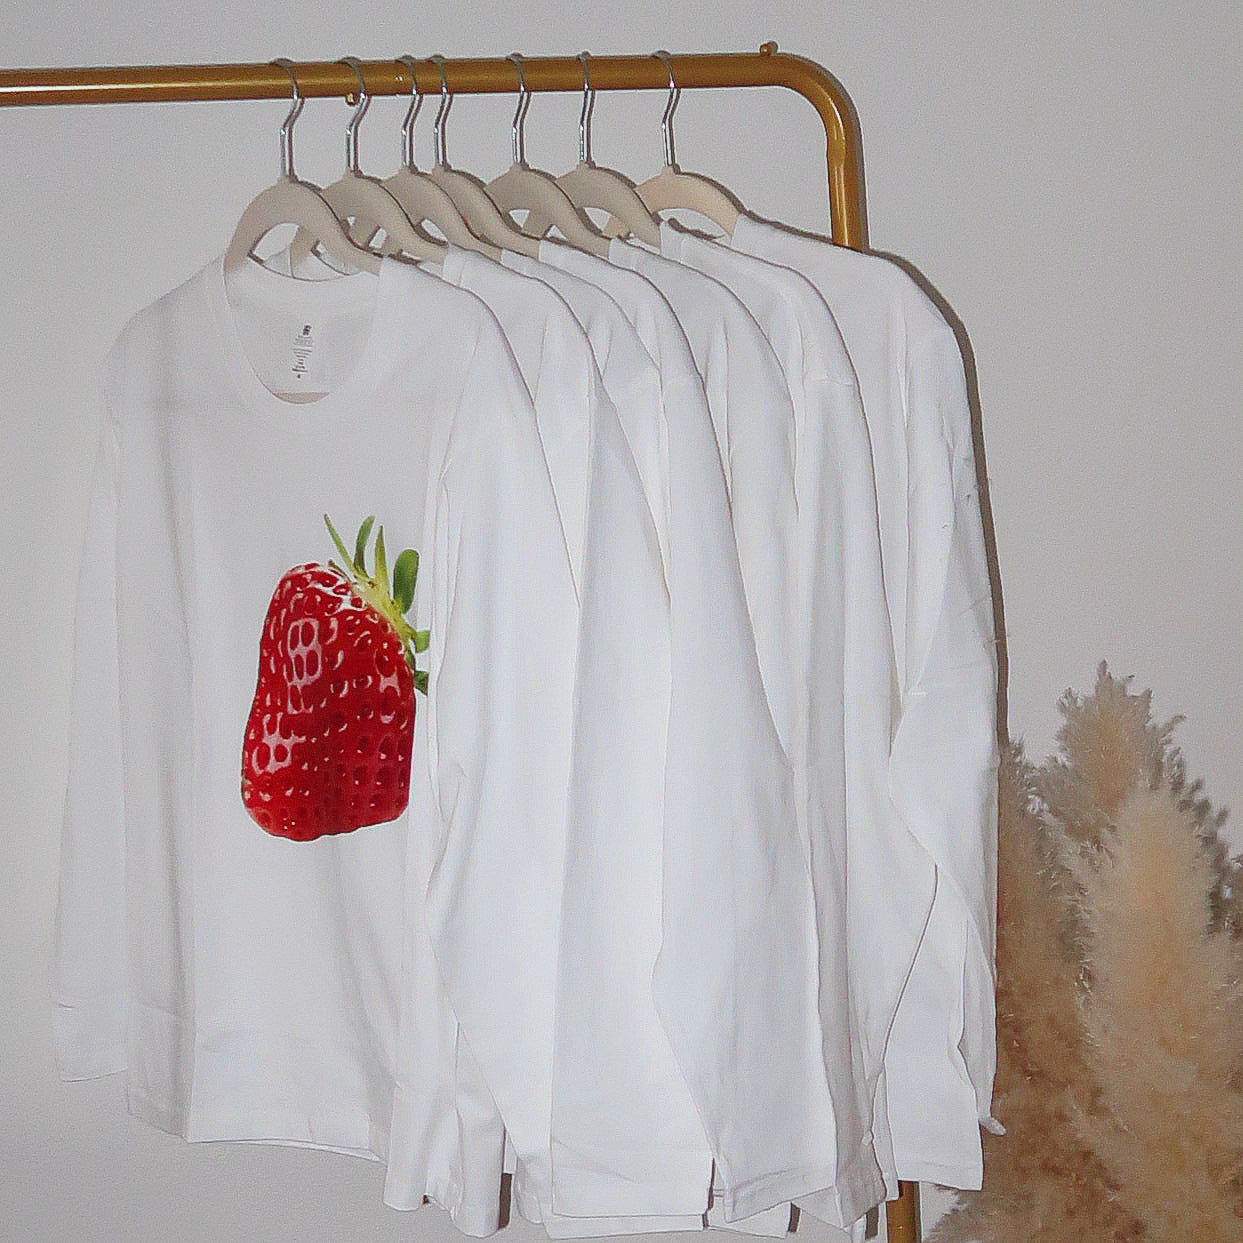 Strawberry Long sleeve T-shirt